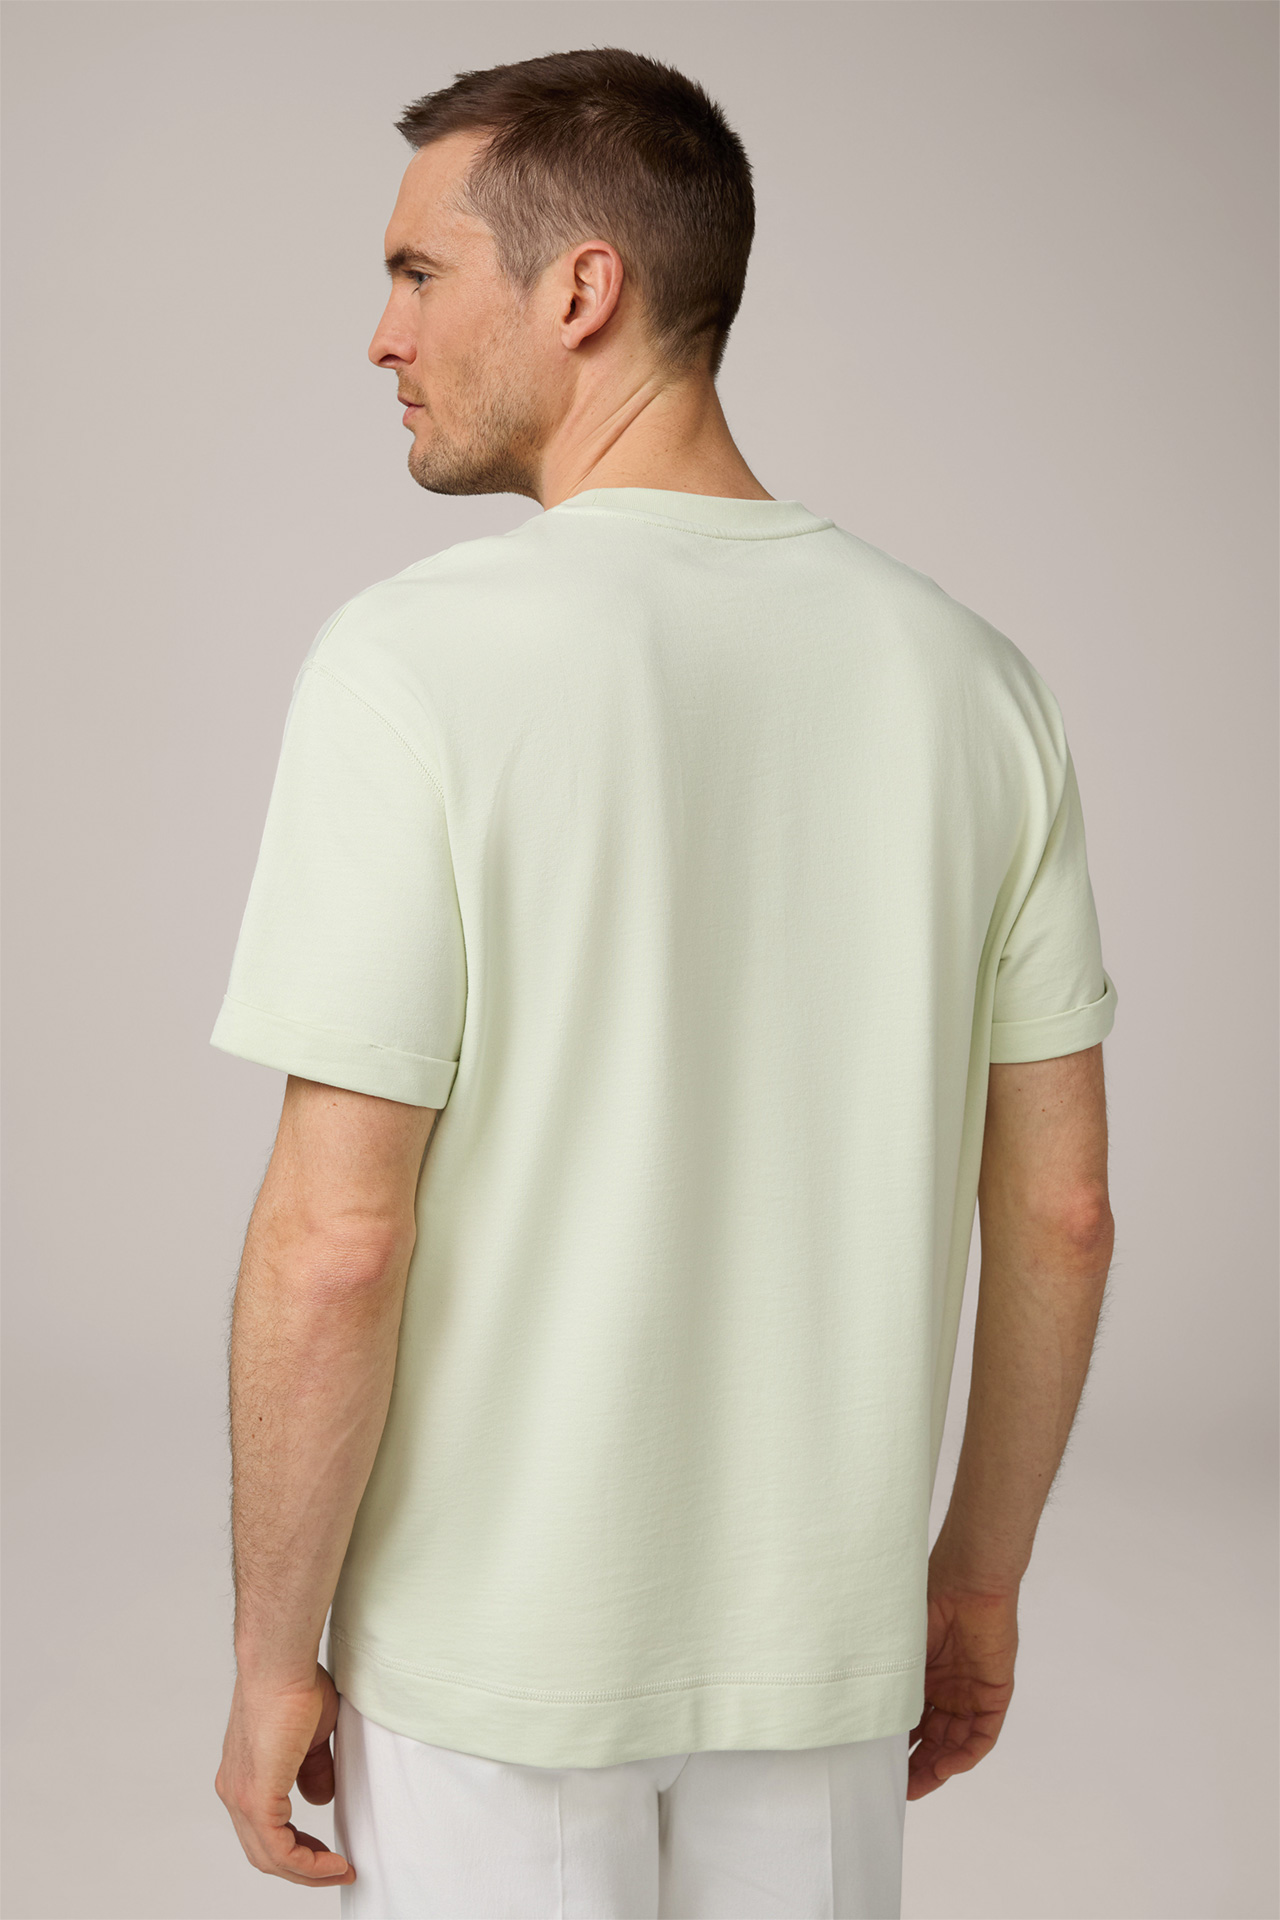 T-shirt en coton Sevo, en vert clair